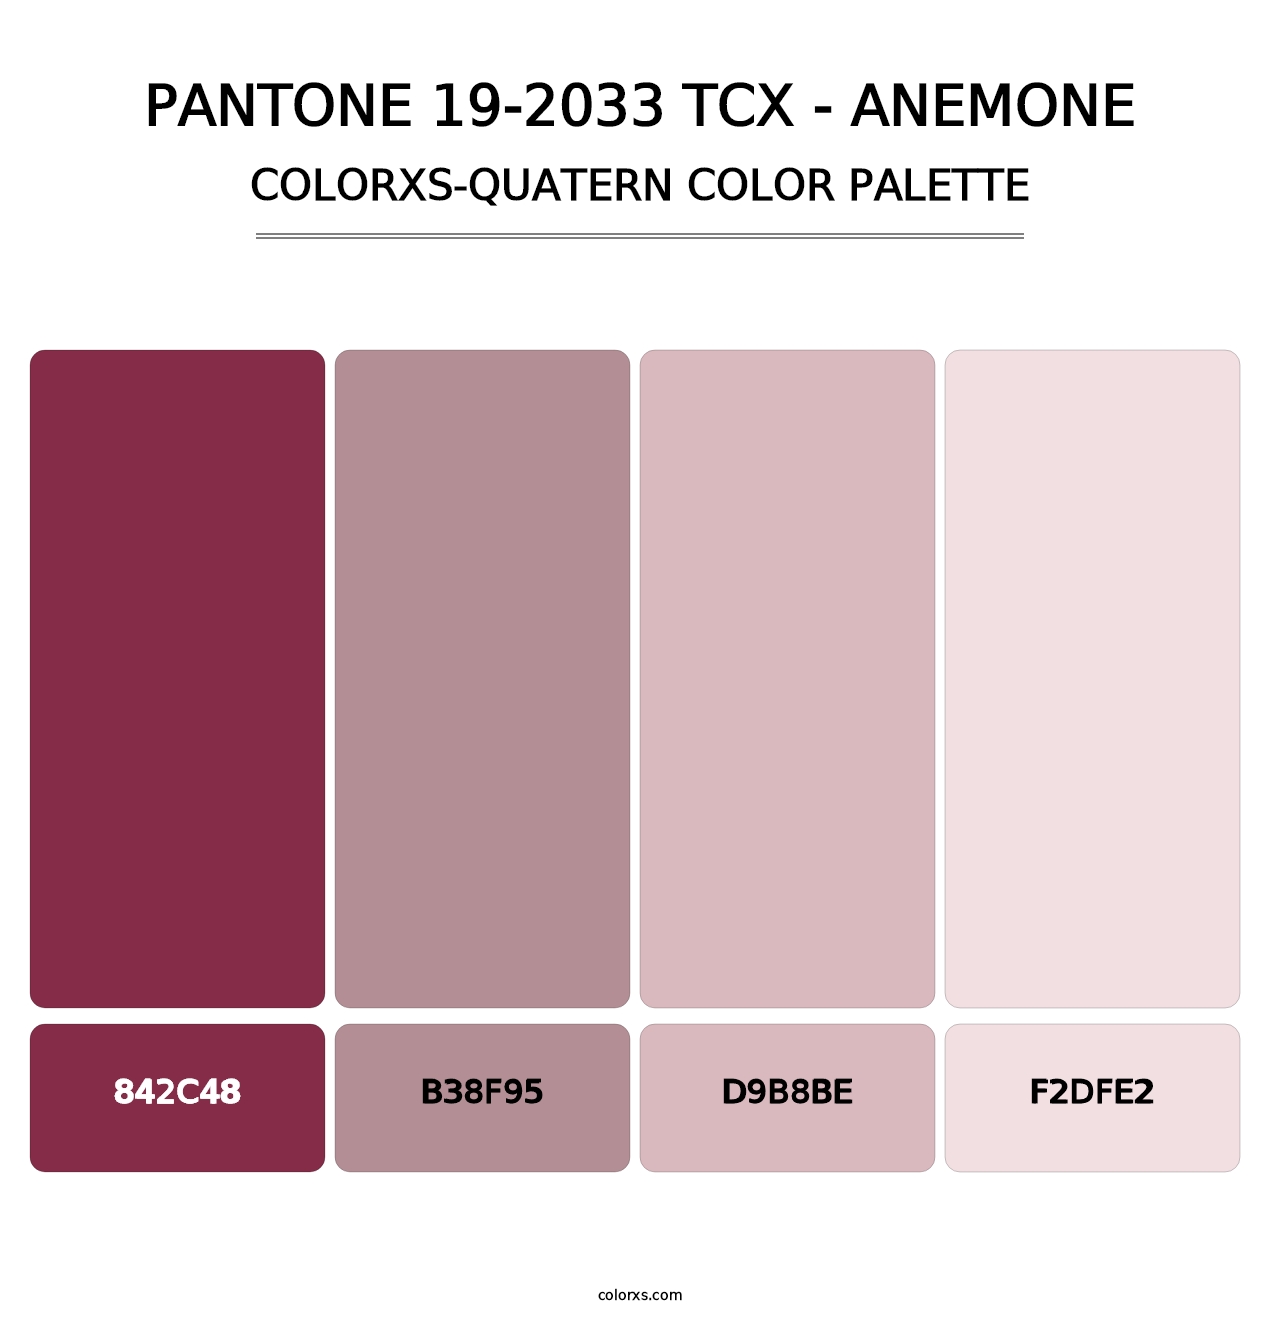 PANTONE 19-2033 TCX - Anemone - Colorxs Quatern Palette